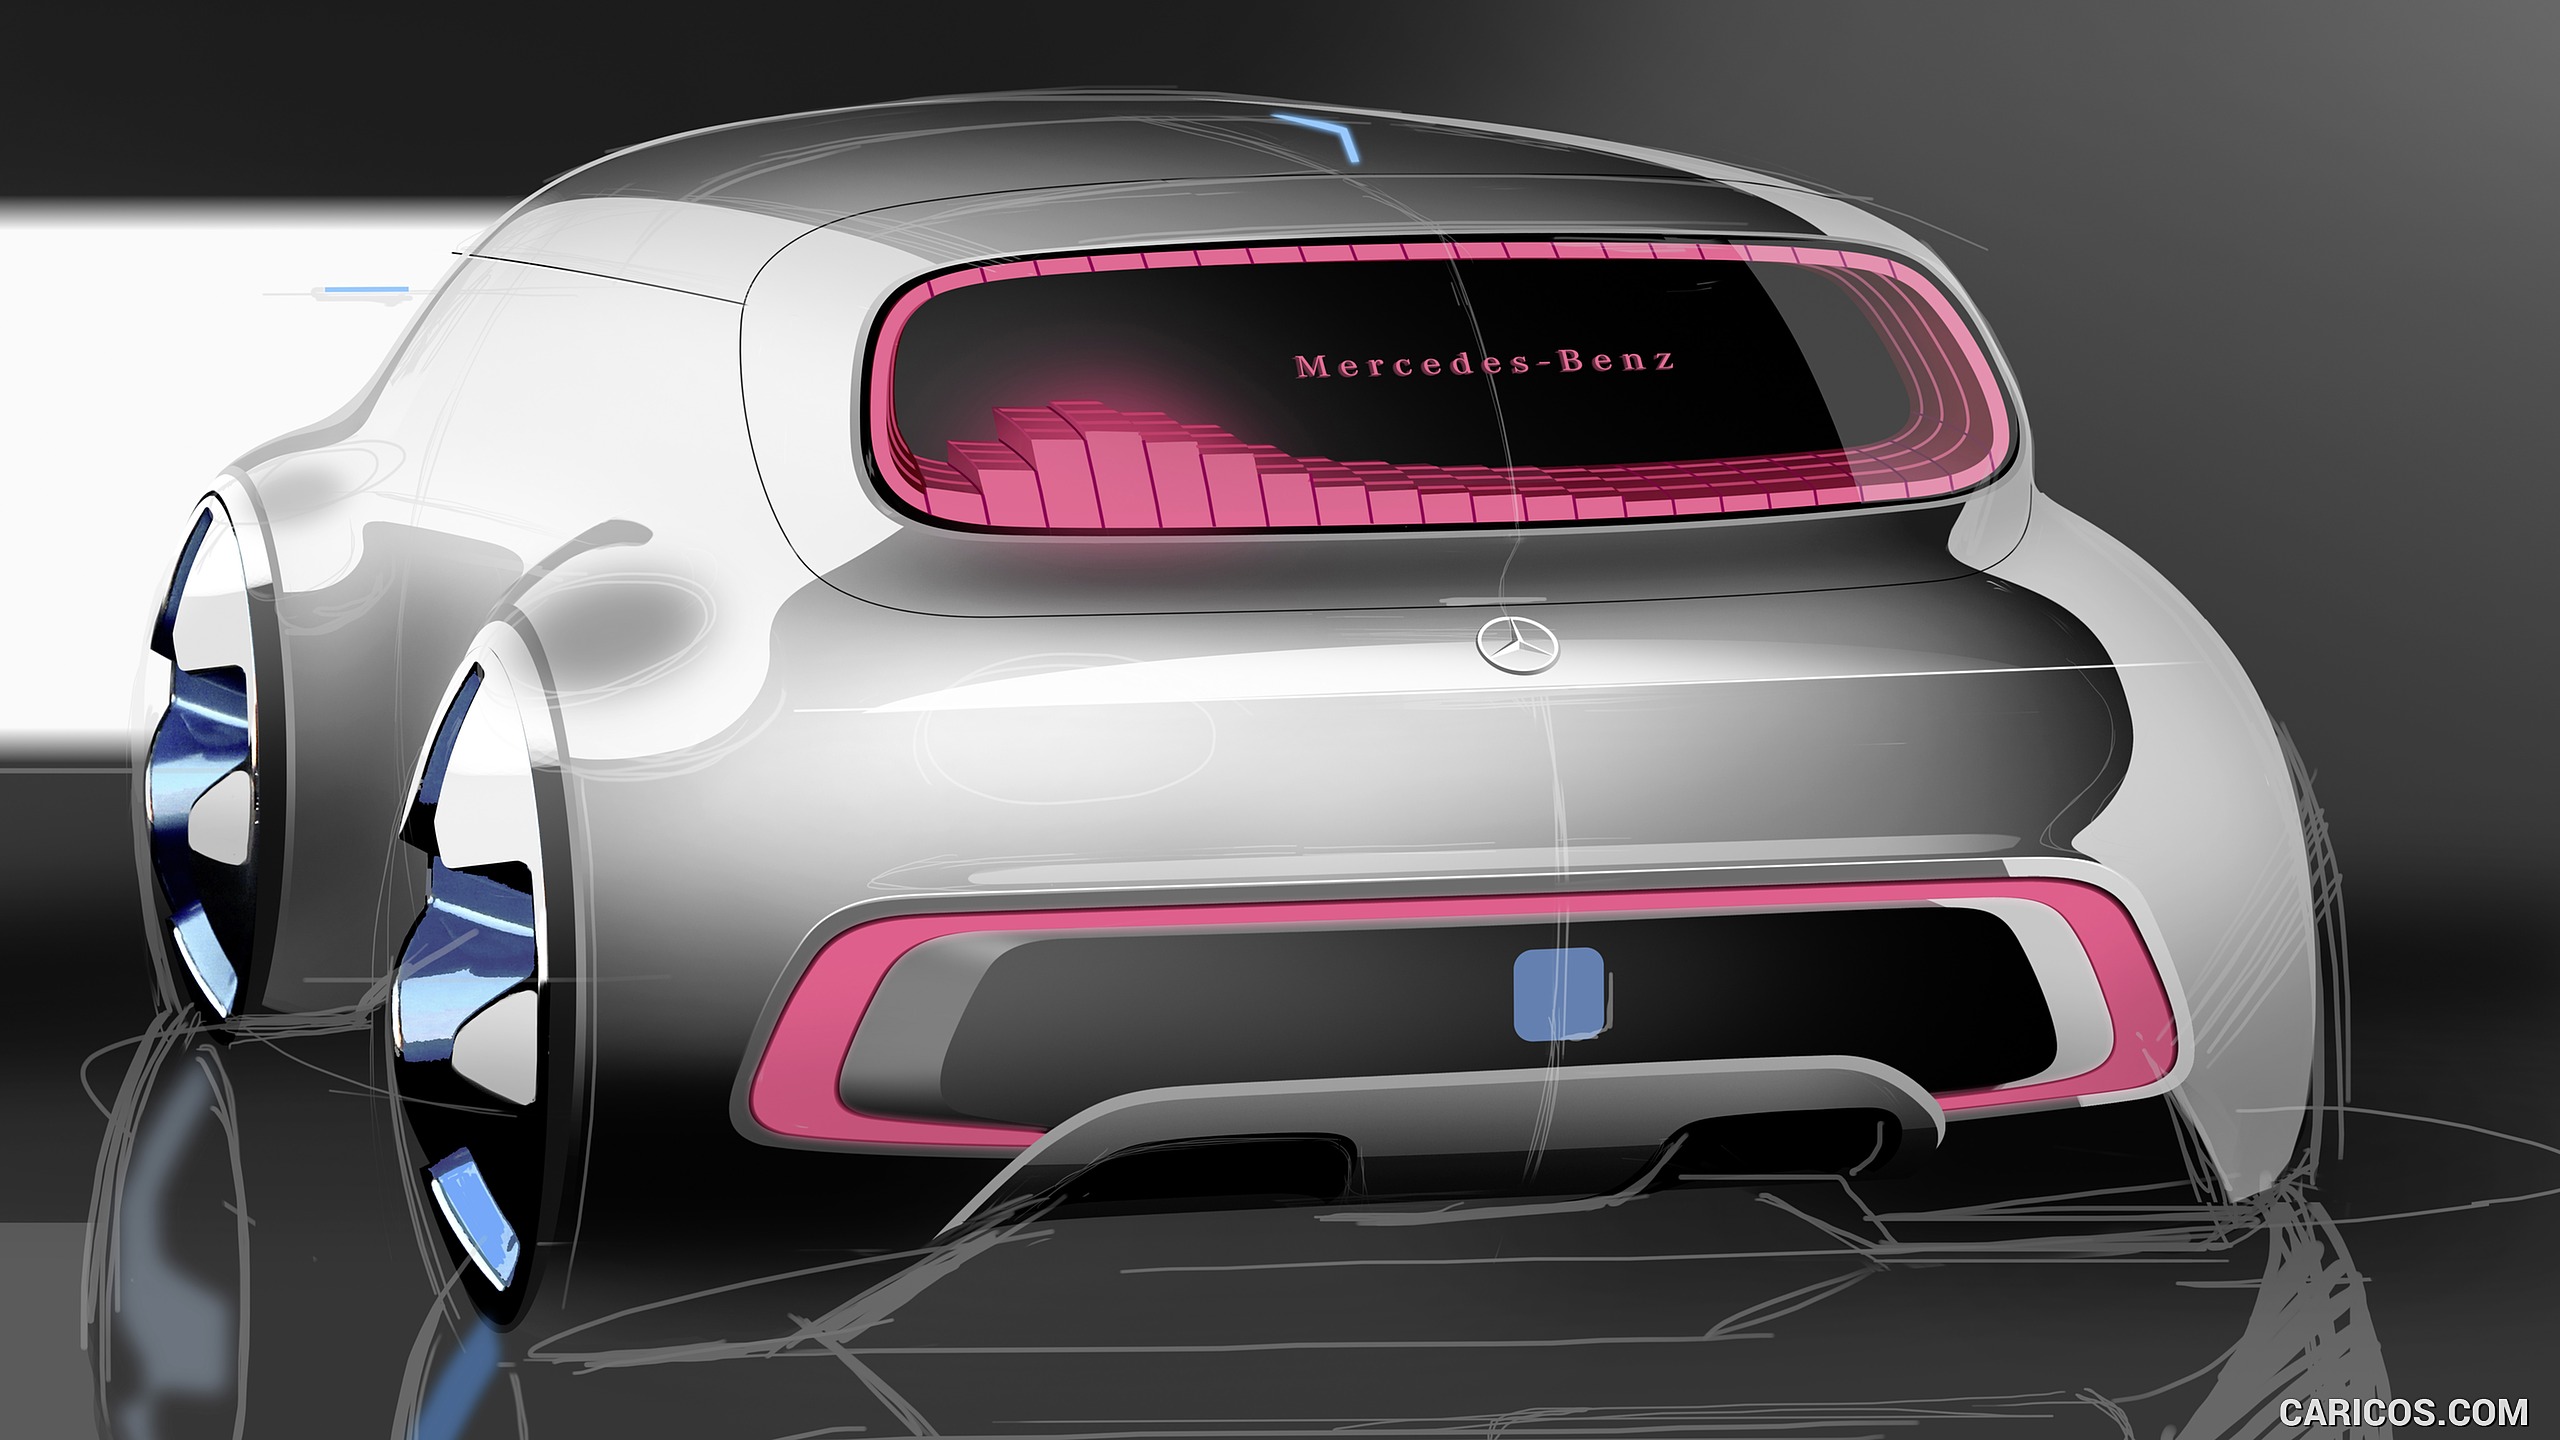 2015 Mercedes-Benz Vision Tokyo Concept - Design Sketch, #16 of 22